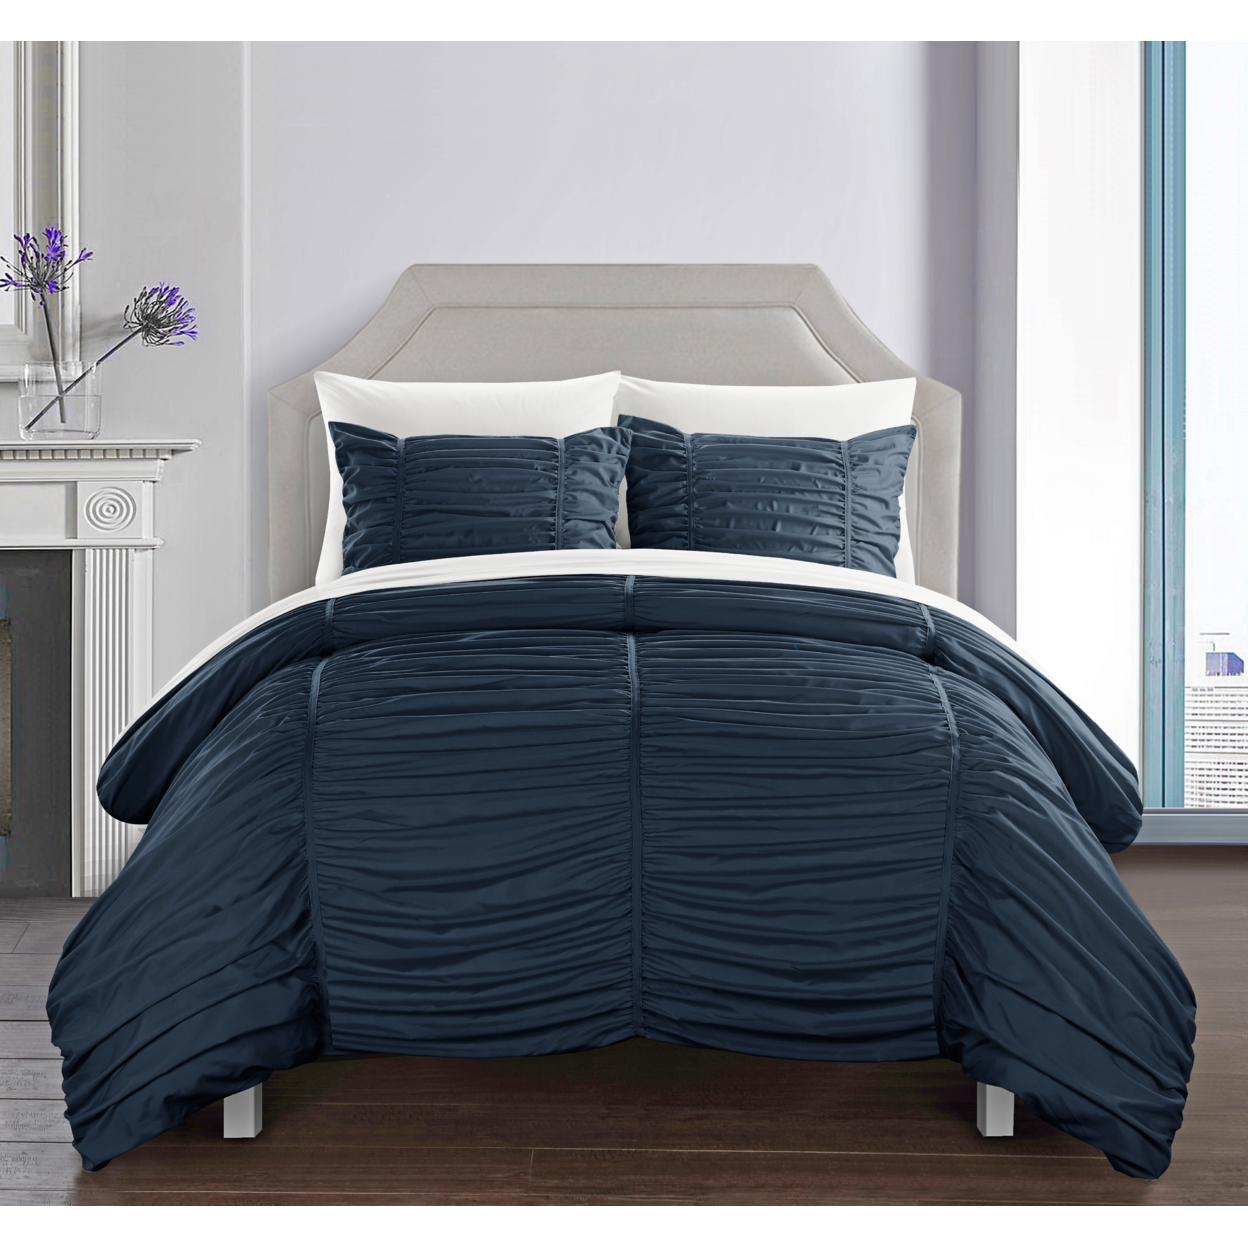 Kiela 2 Pc Or 3 Pc Ruched Comforter Set - Beige, Twin